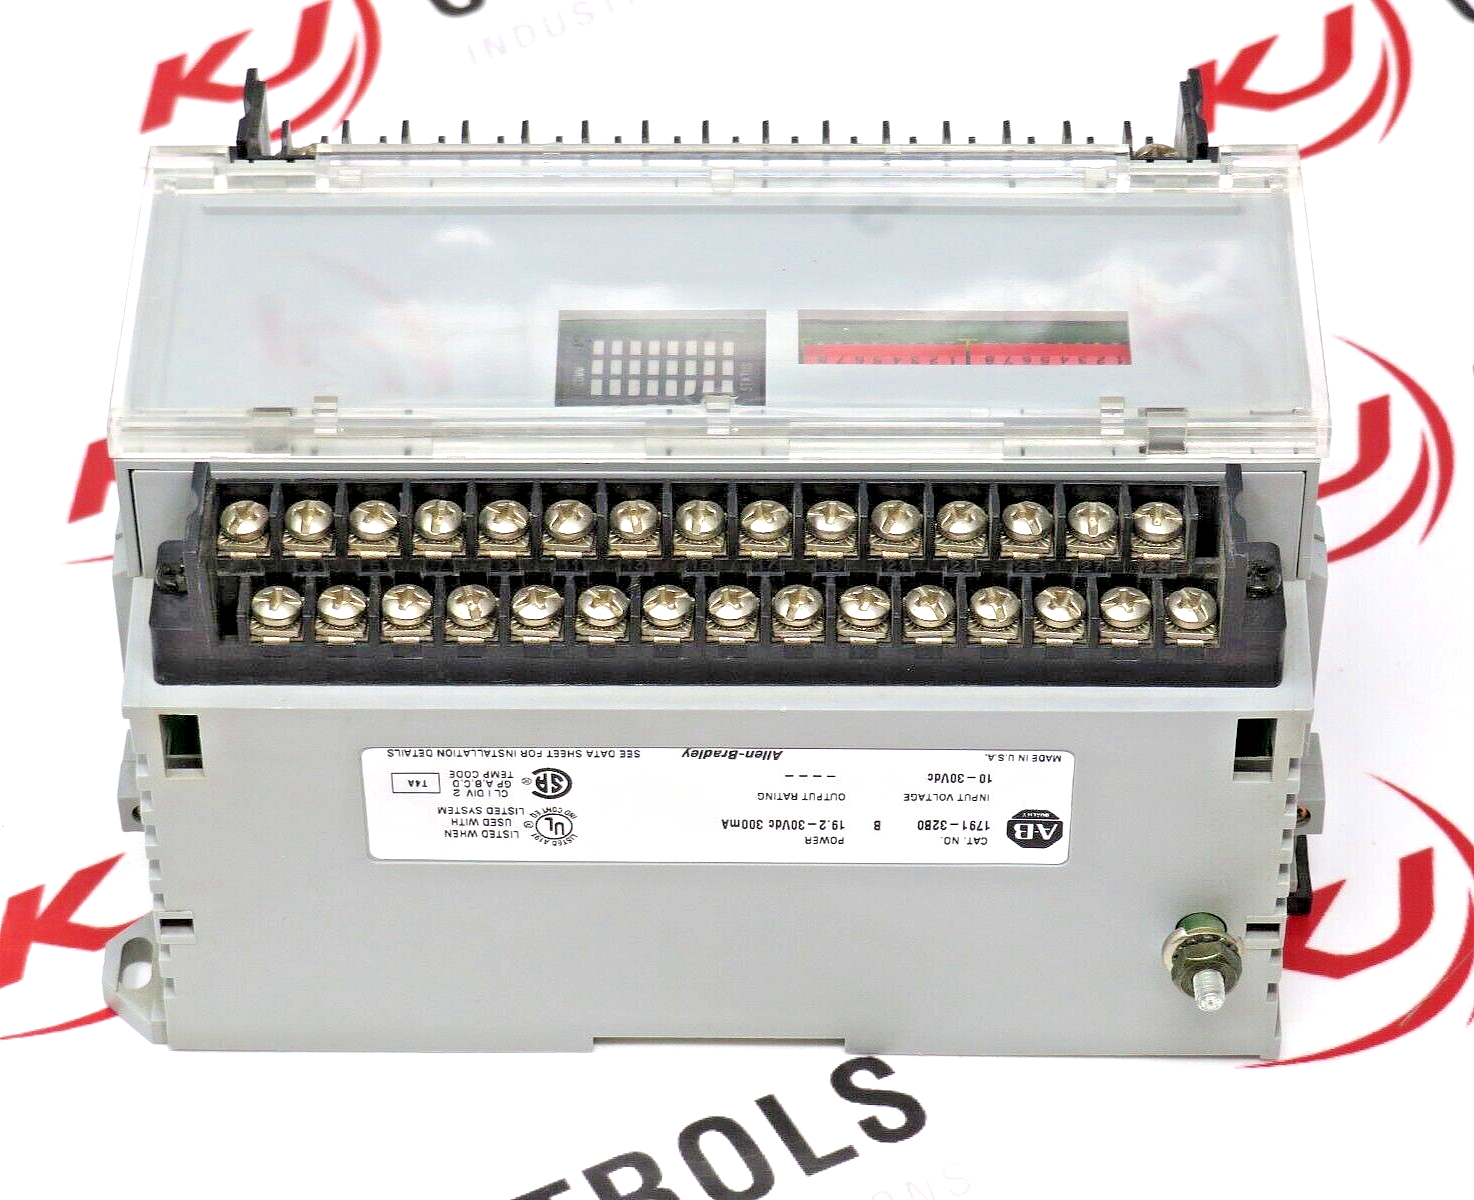 Allen-Bradley 1791-32B0 Series B 32-Point Input Discrete Block Module